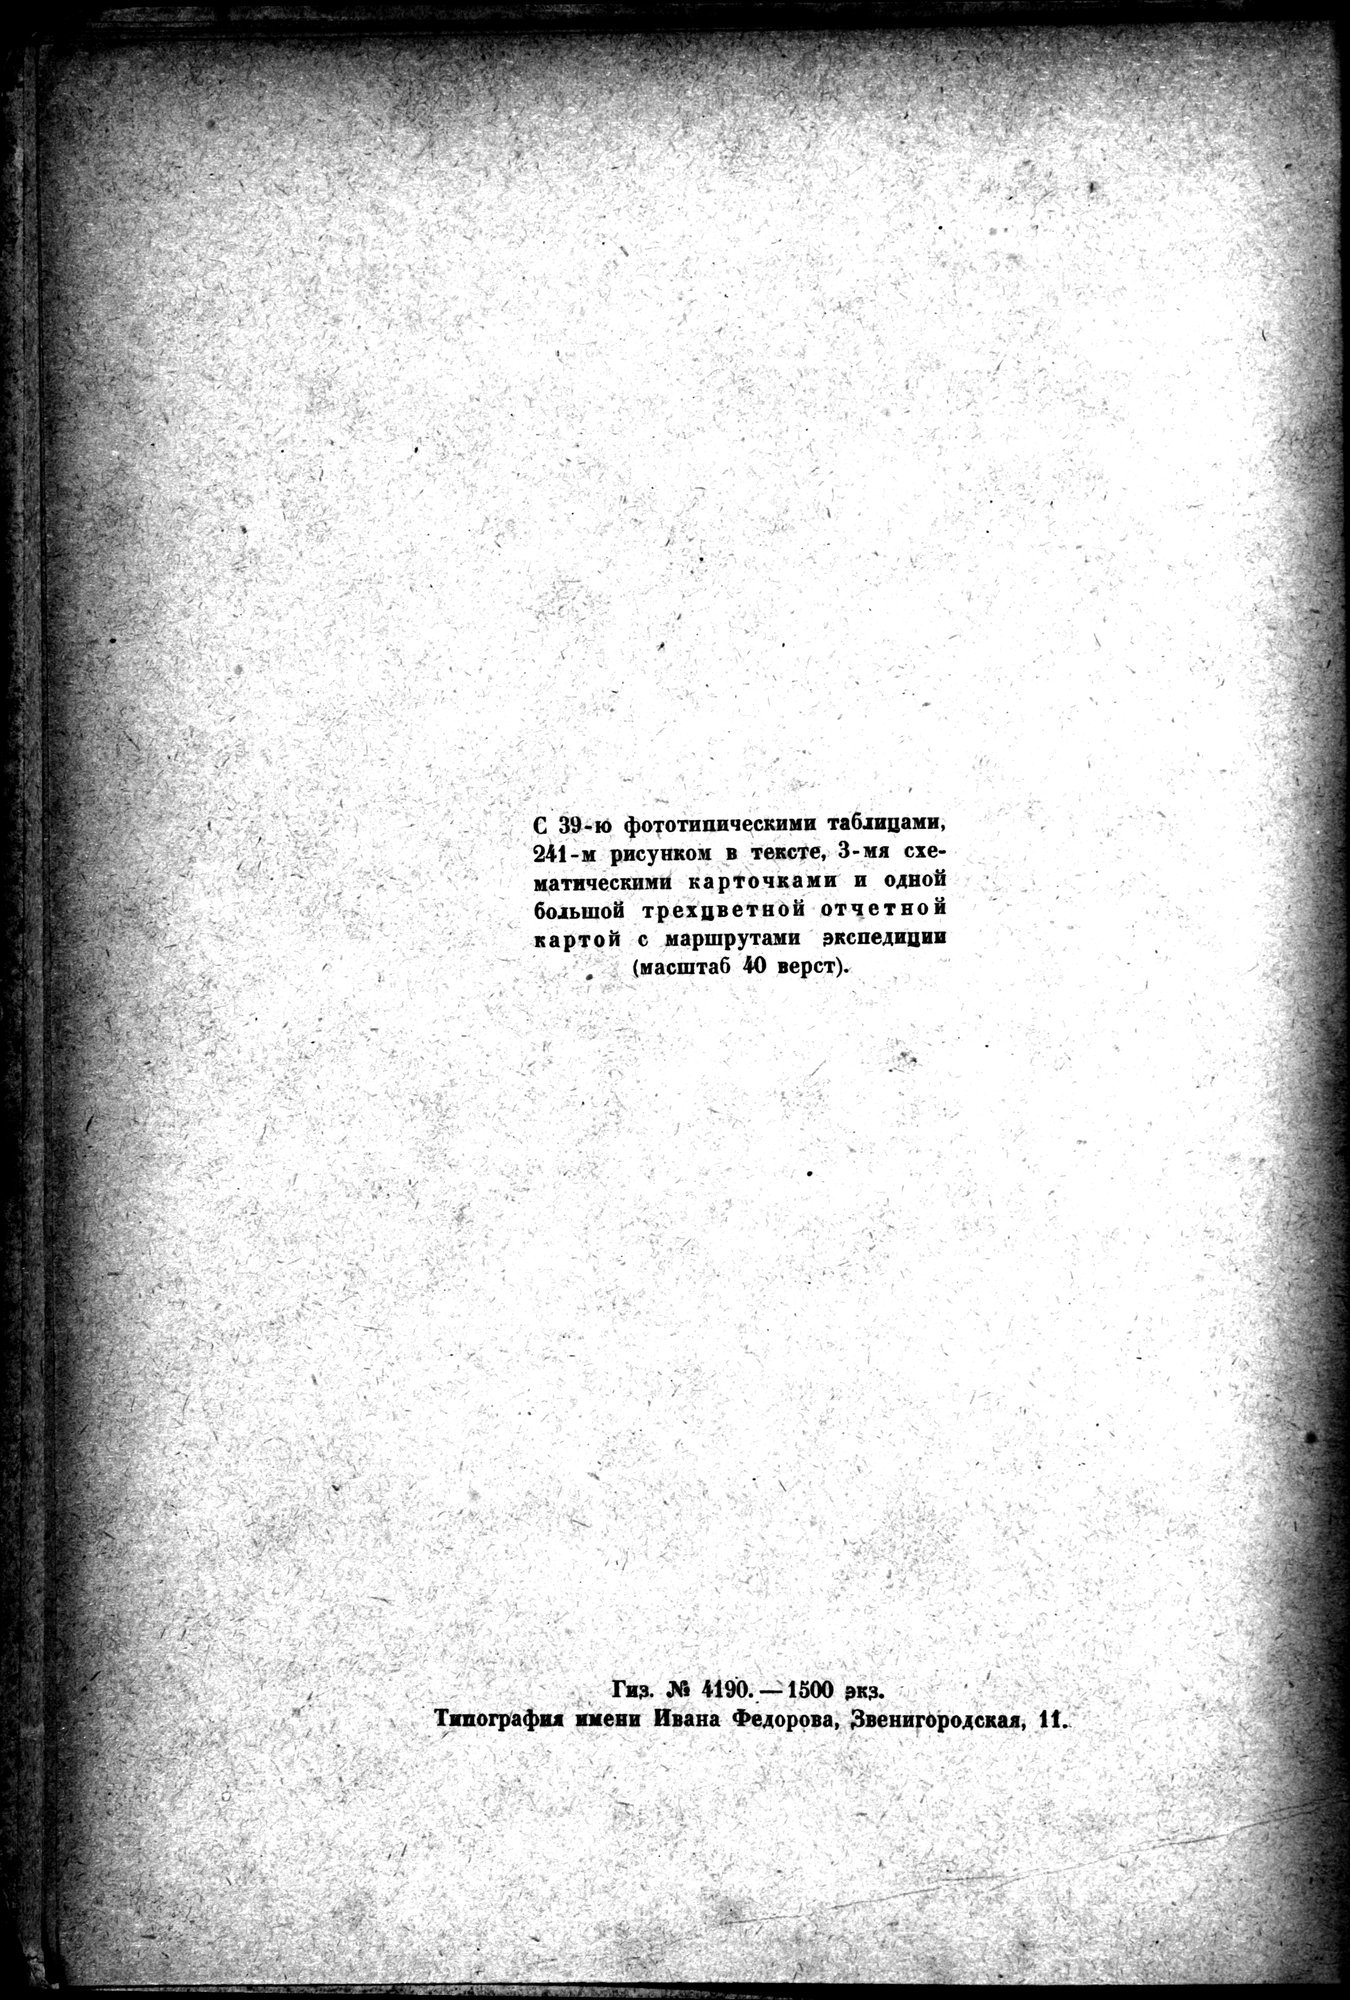 Mongoliya i Amdo i mertby gorod Khara-Khoto : vol.1 / Page 10 (Grayscale High Resolution Image)